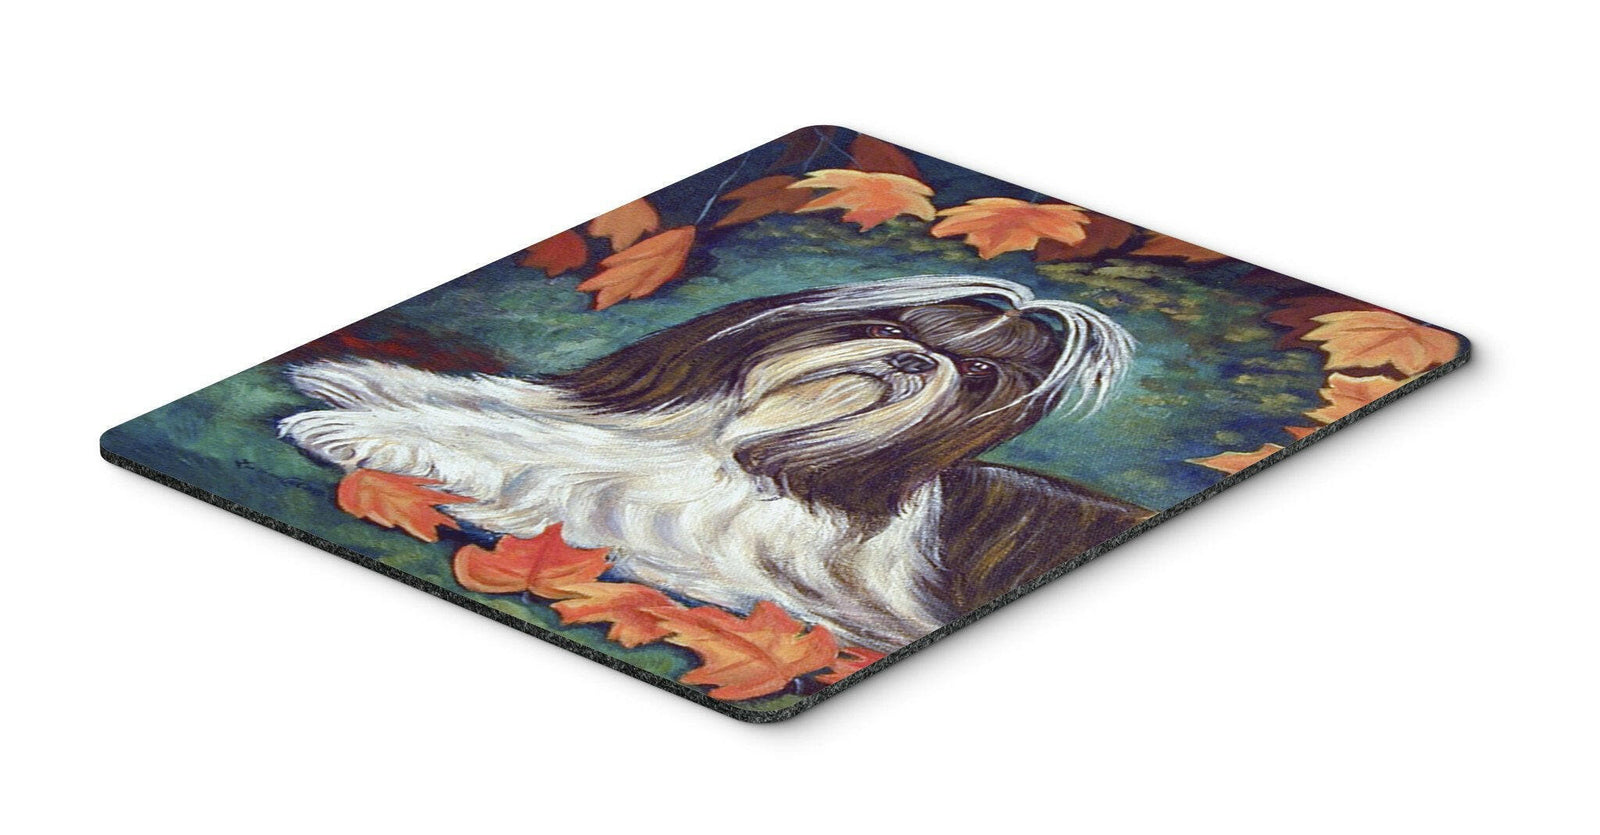 Autumn Leaves Shih Tzu Mouse Pad / Hot Pad / Trivet by Caroline's Treasures